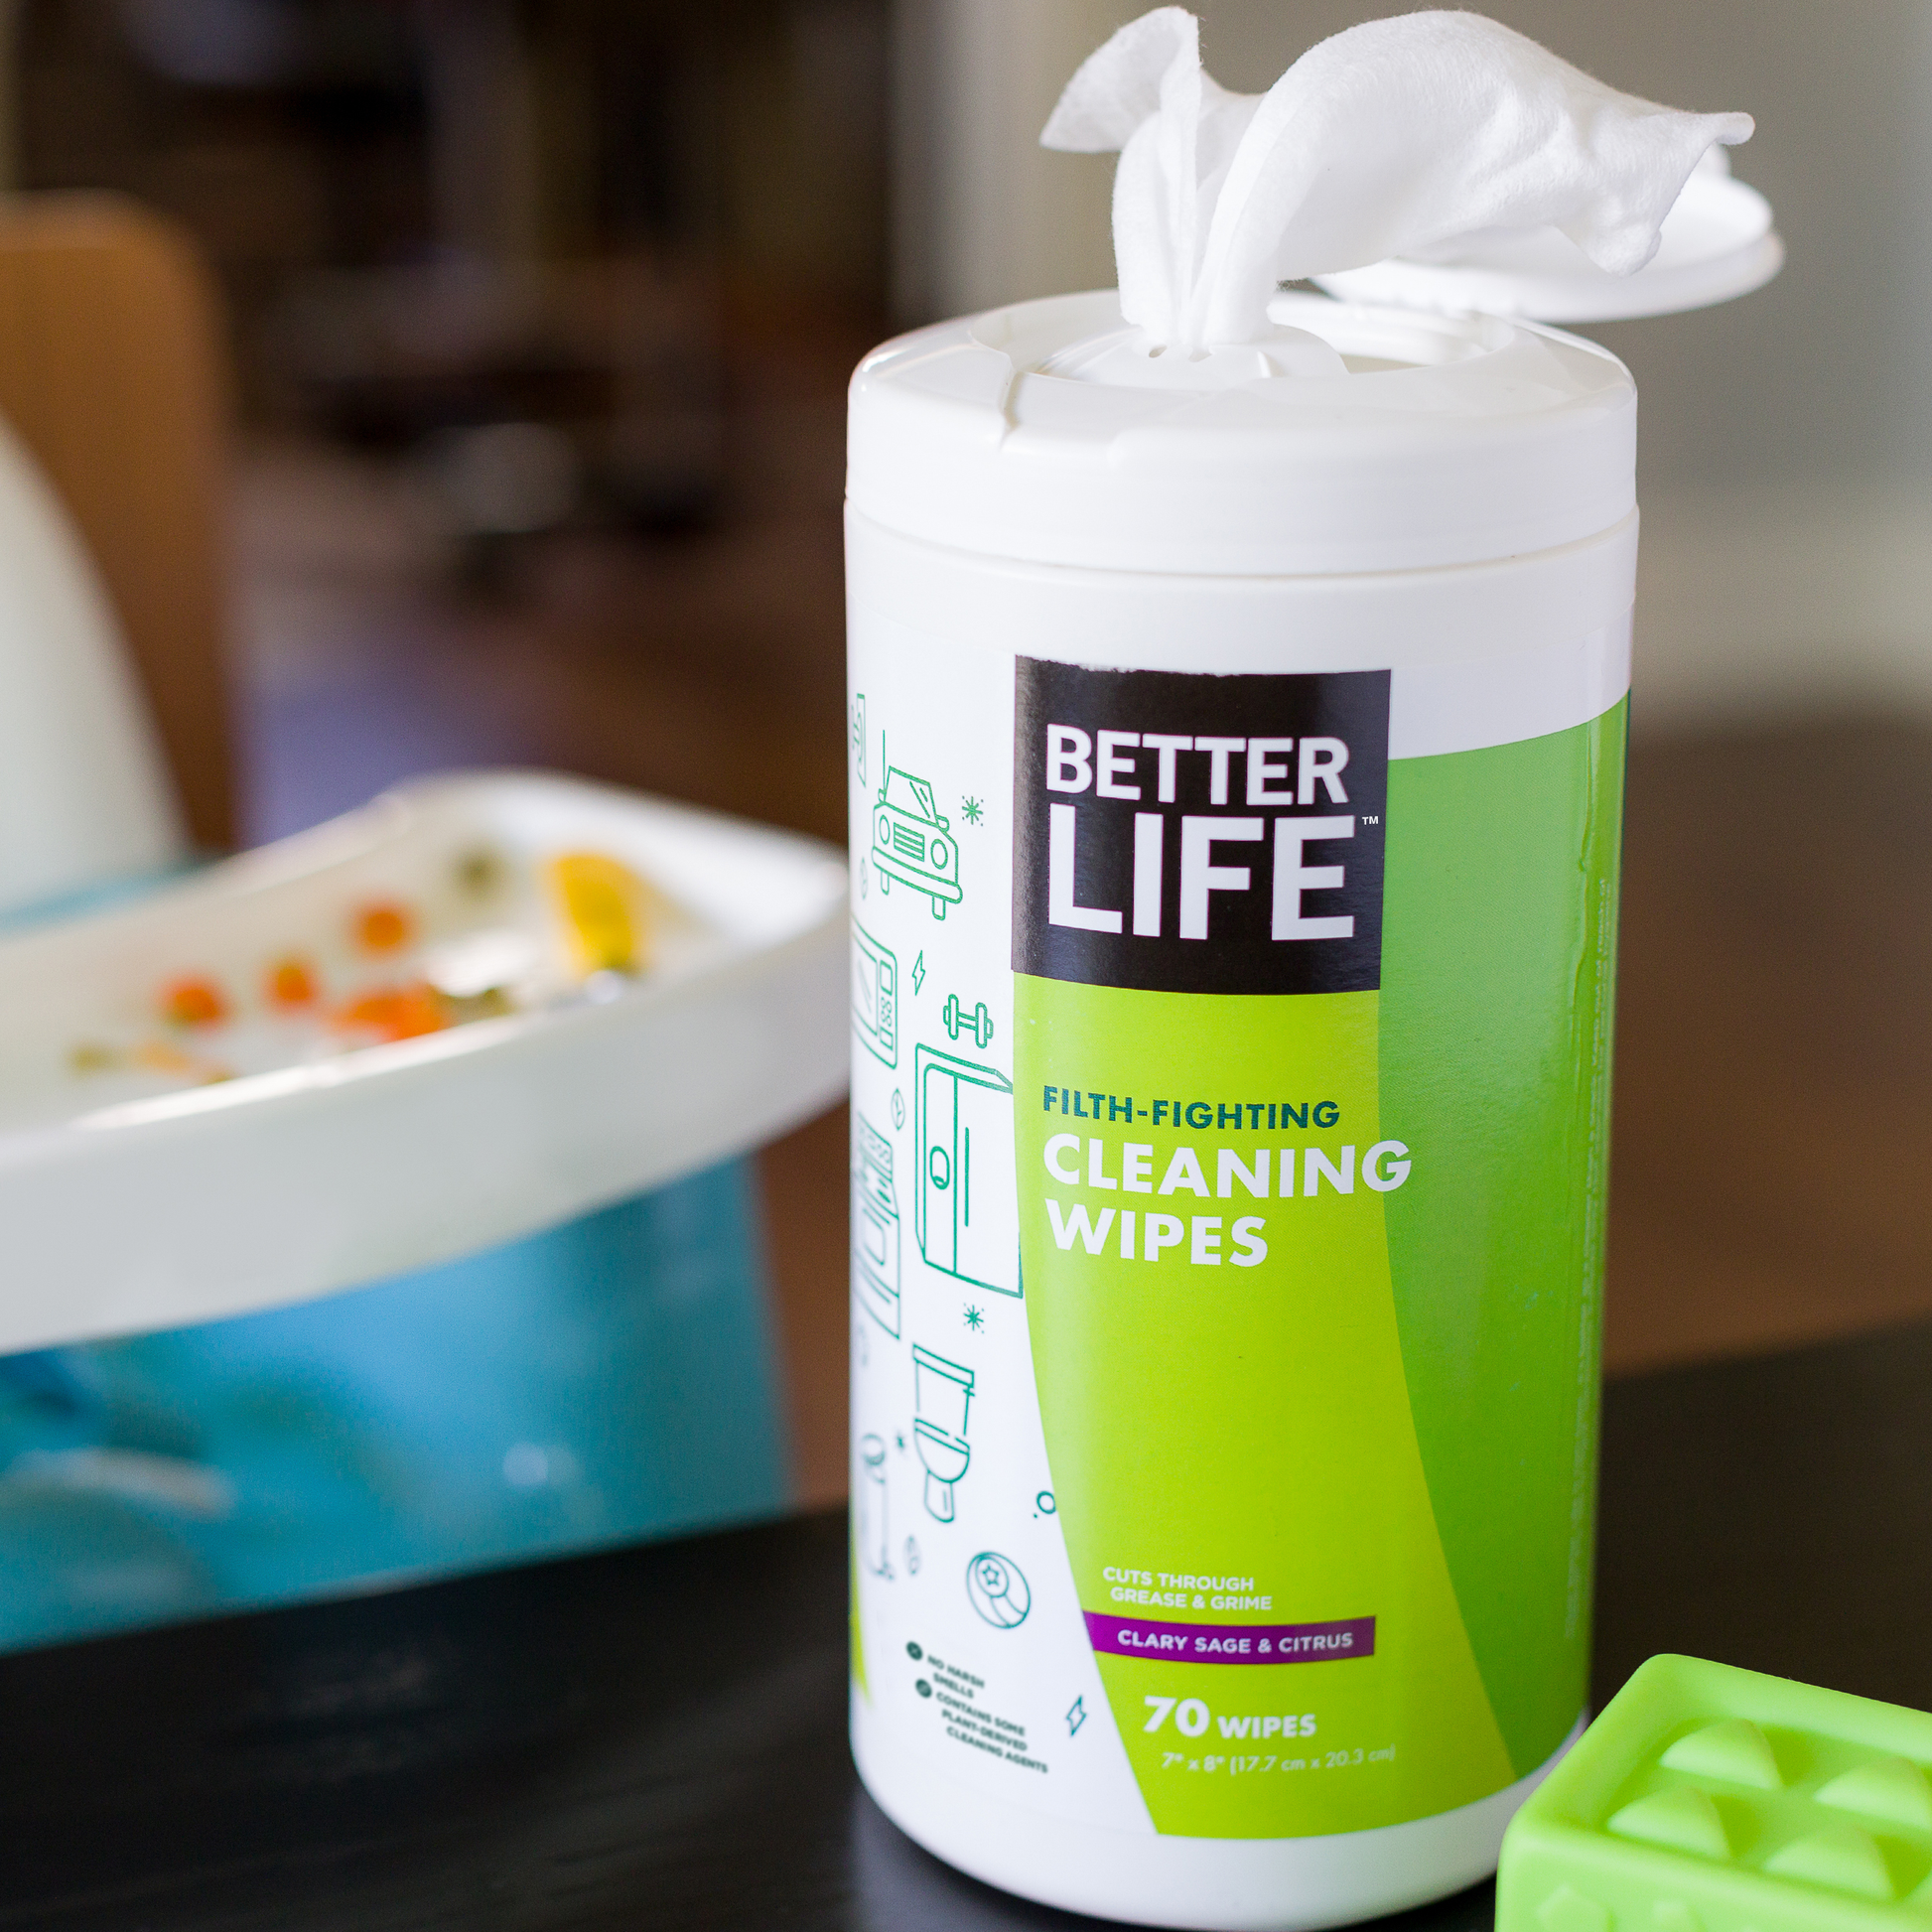 Refreshing Citrus Clean Home & Laundry Bundle